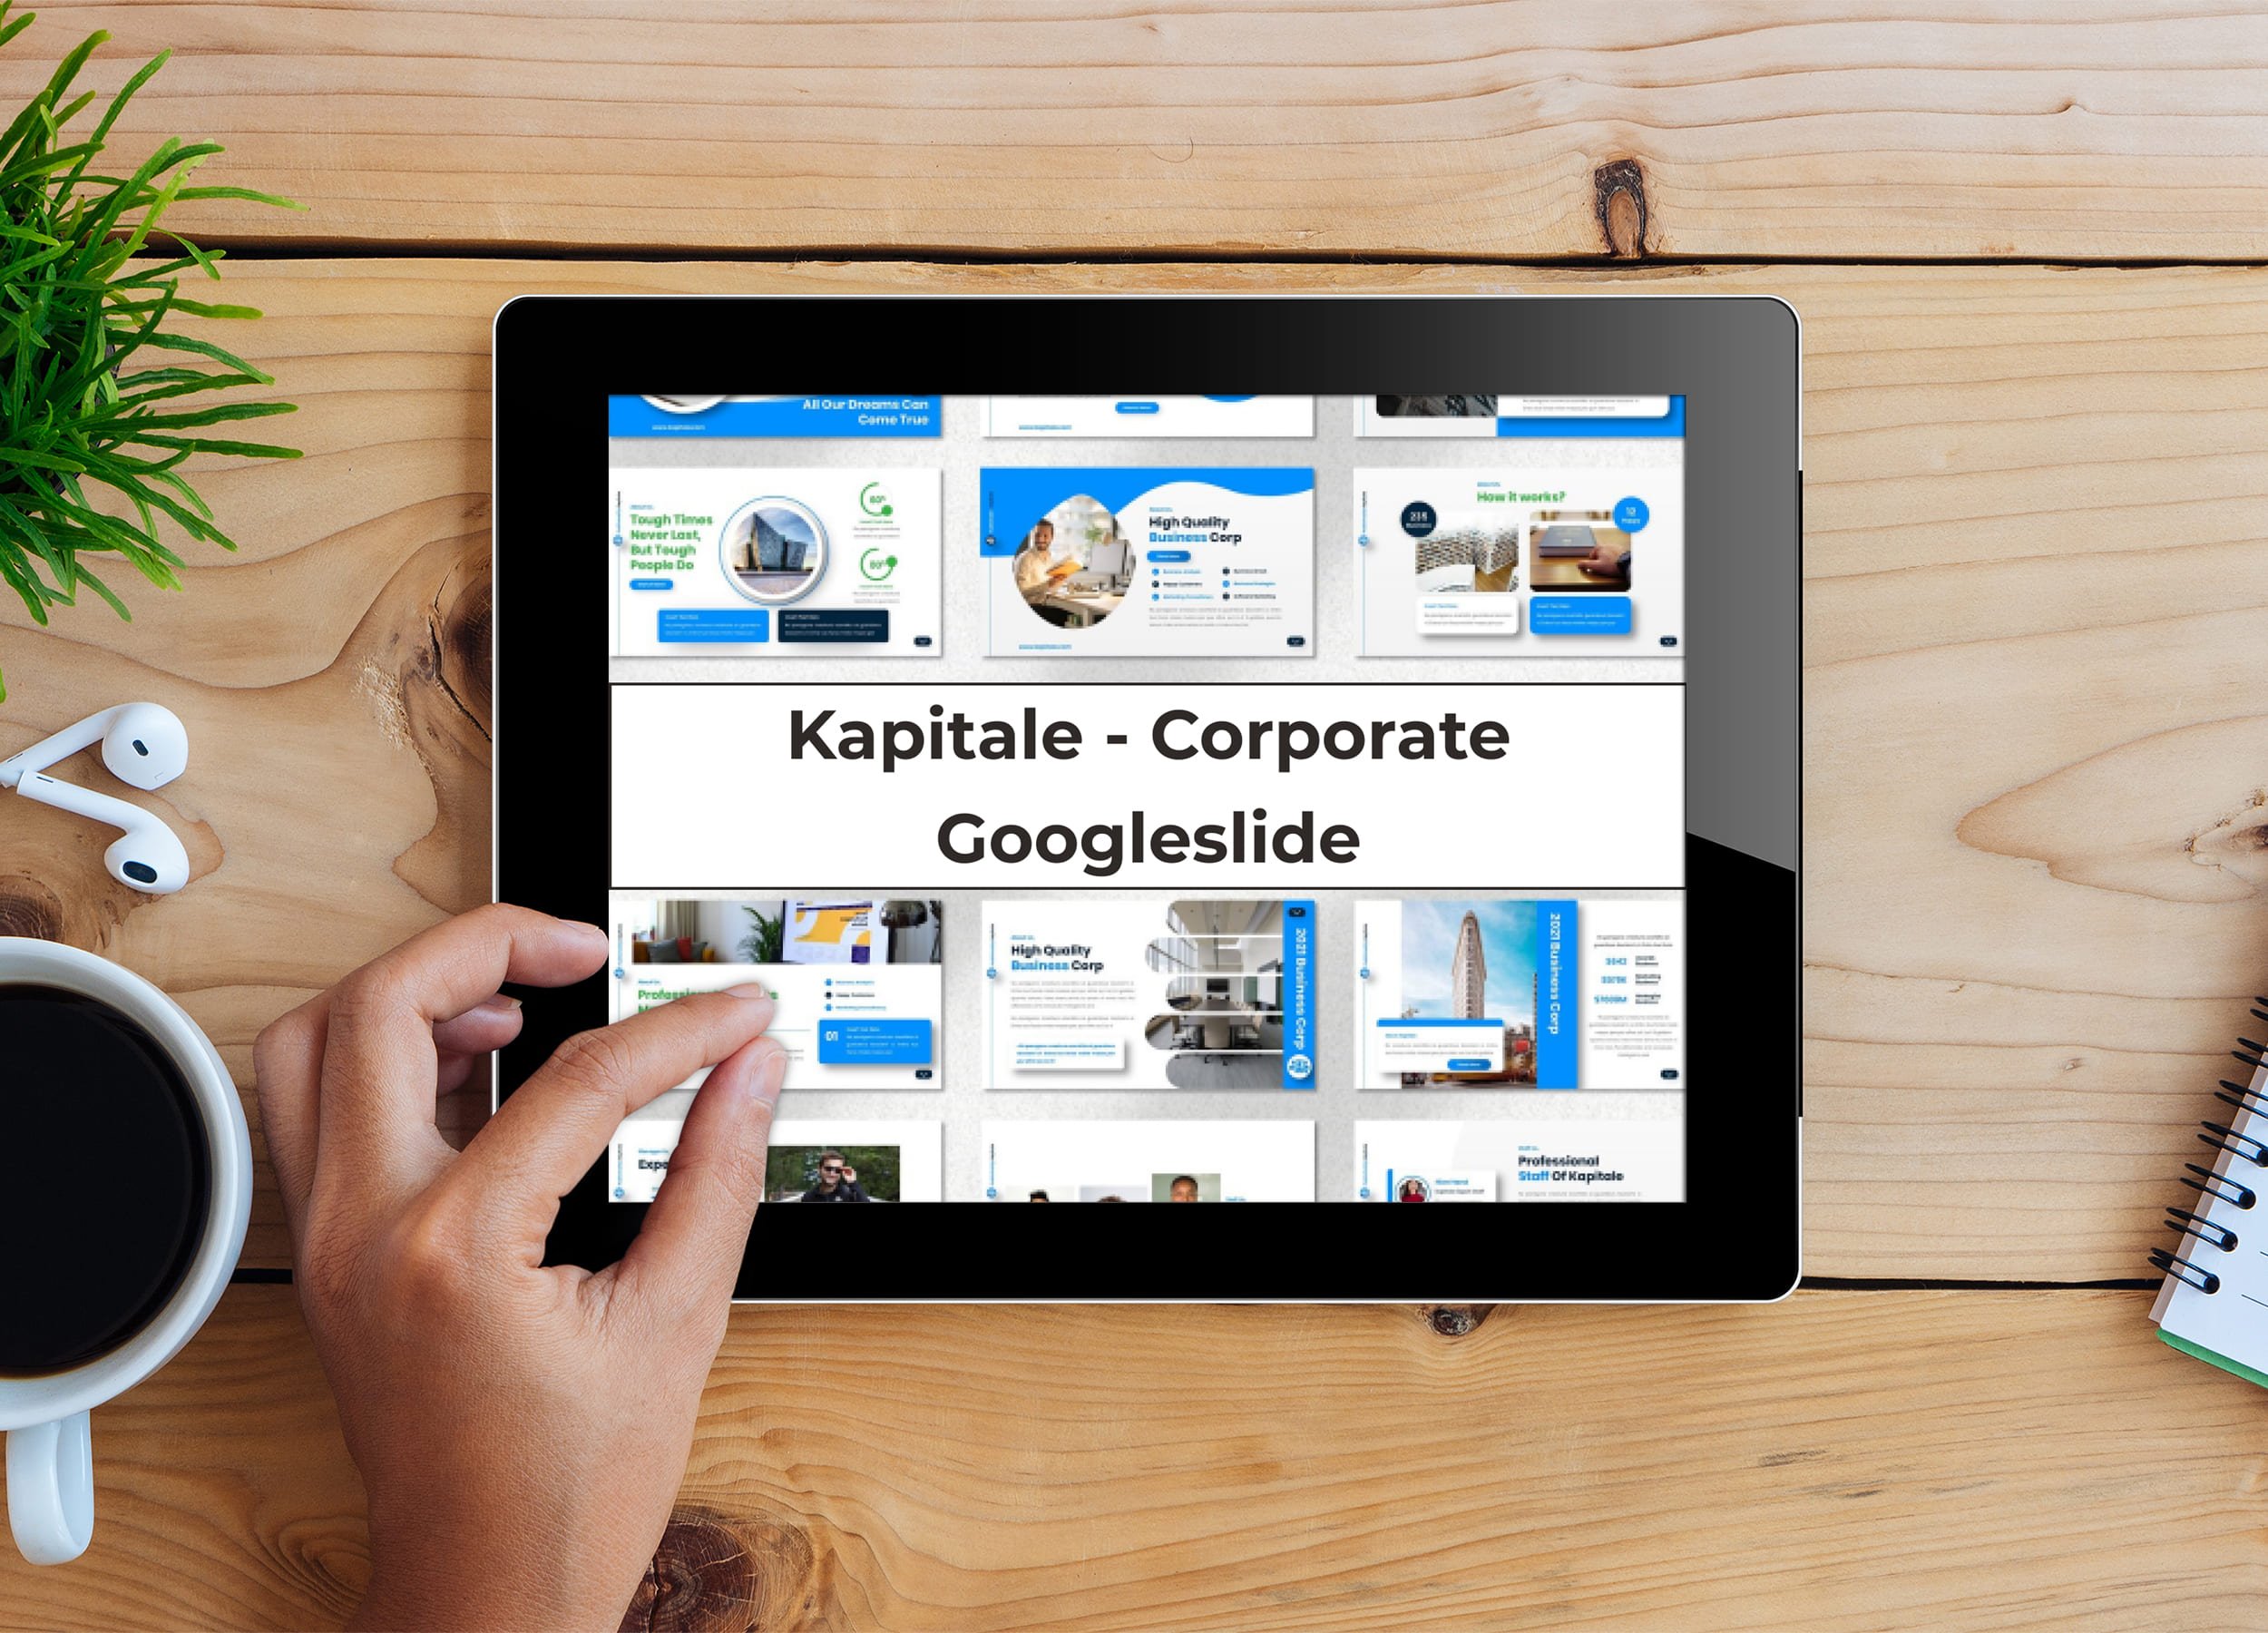 Tablet option of the Kapitale - Corporate Googleslide.